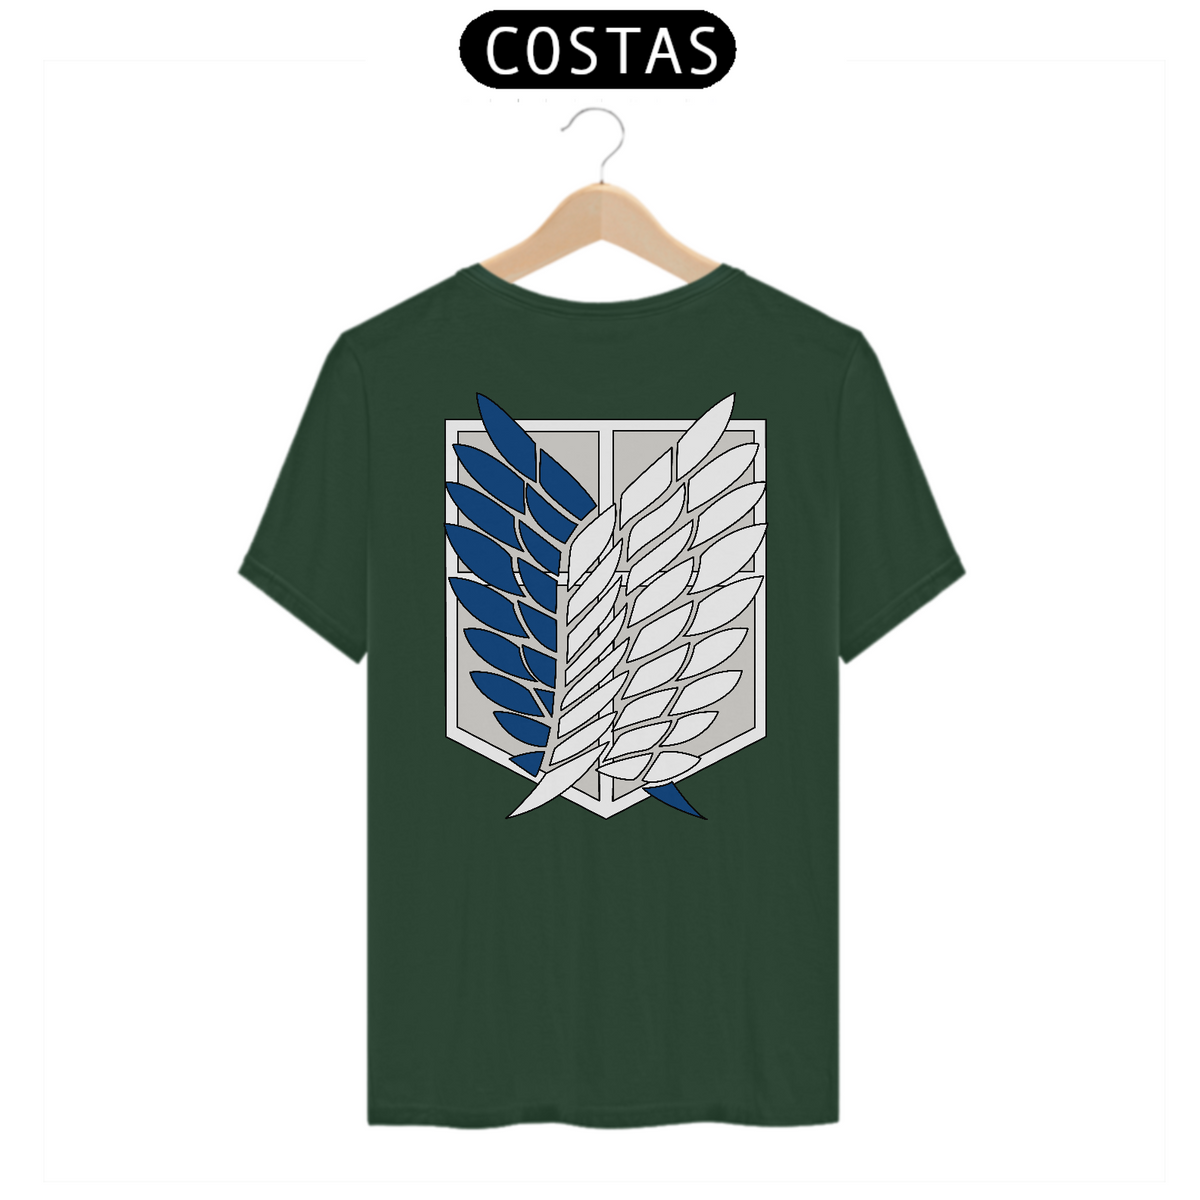 Nome do produto: Camiseta Costas - ATTACK ON TITAN